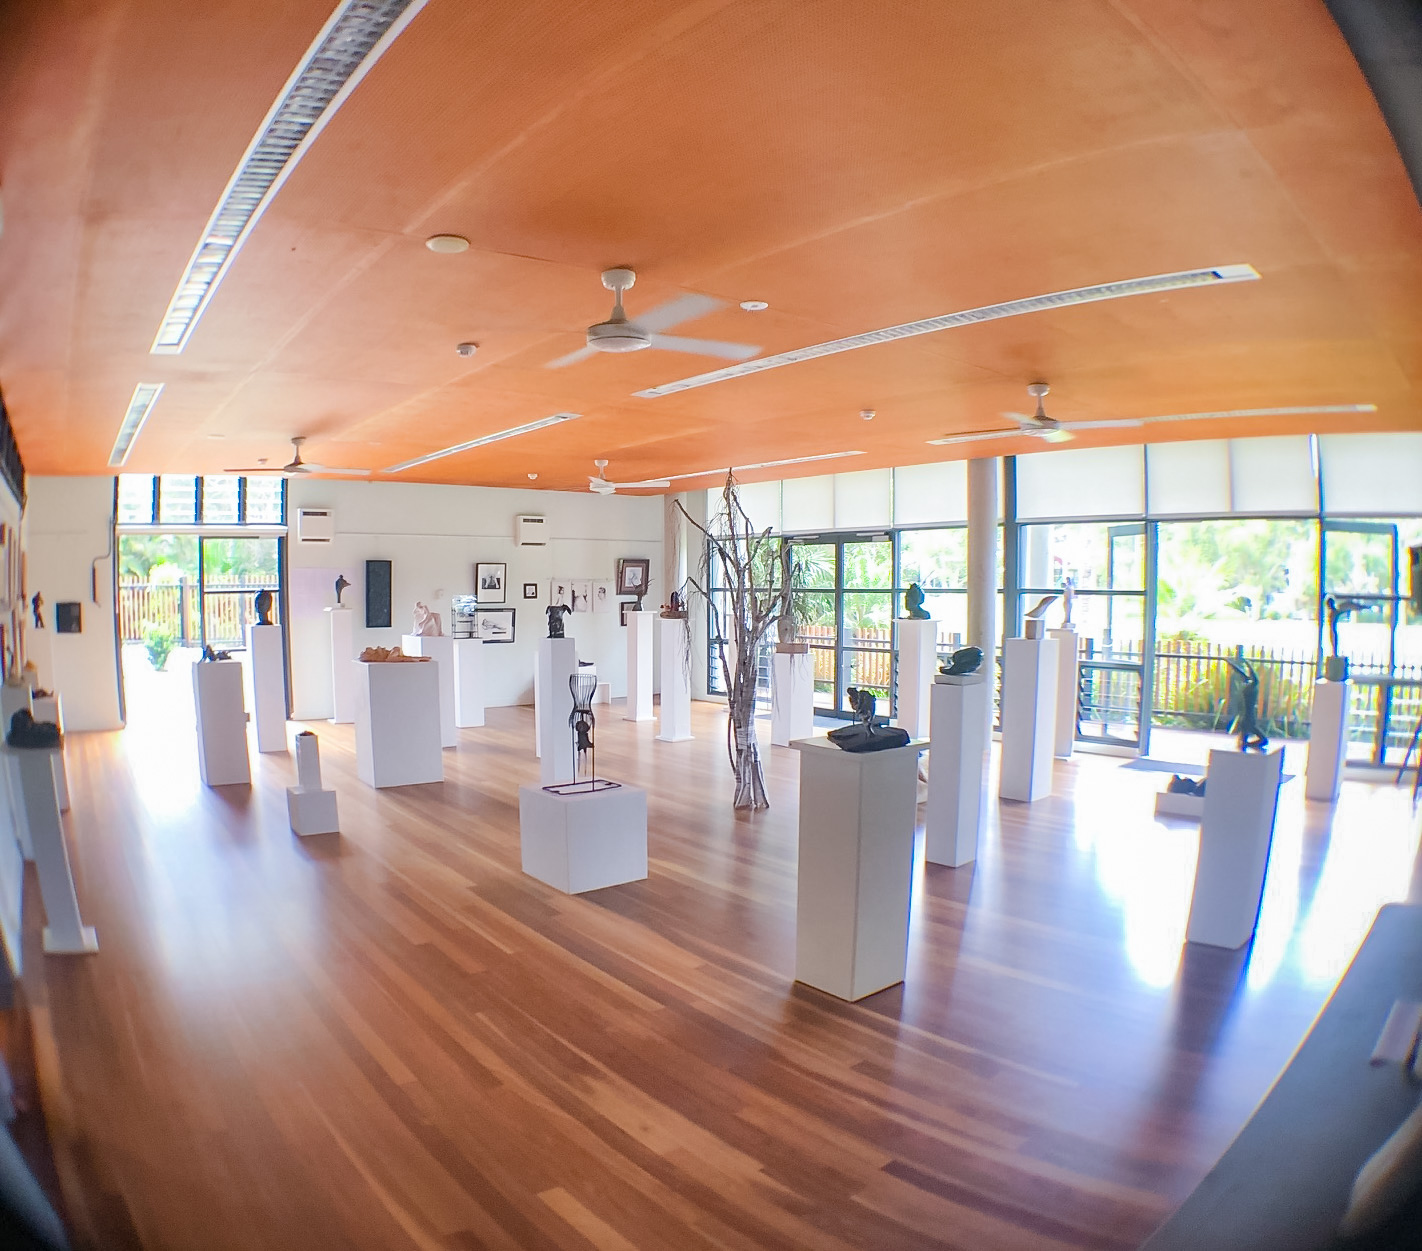 Event Image – Sydney Art Space 2019 Exhibition at Avalon Recreation Centre